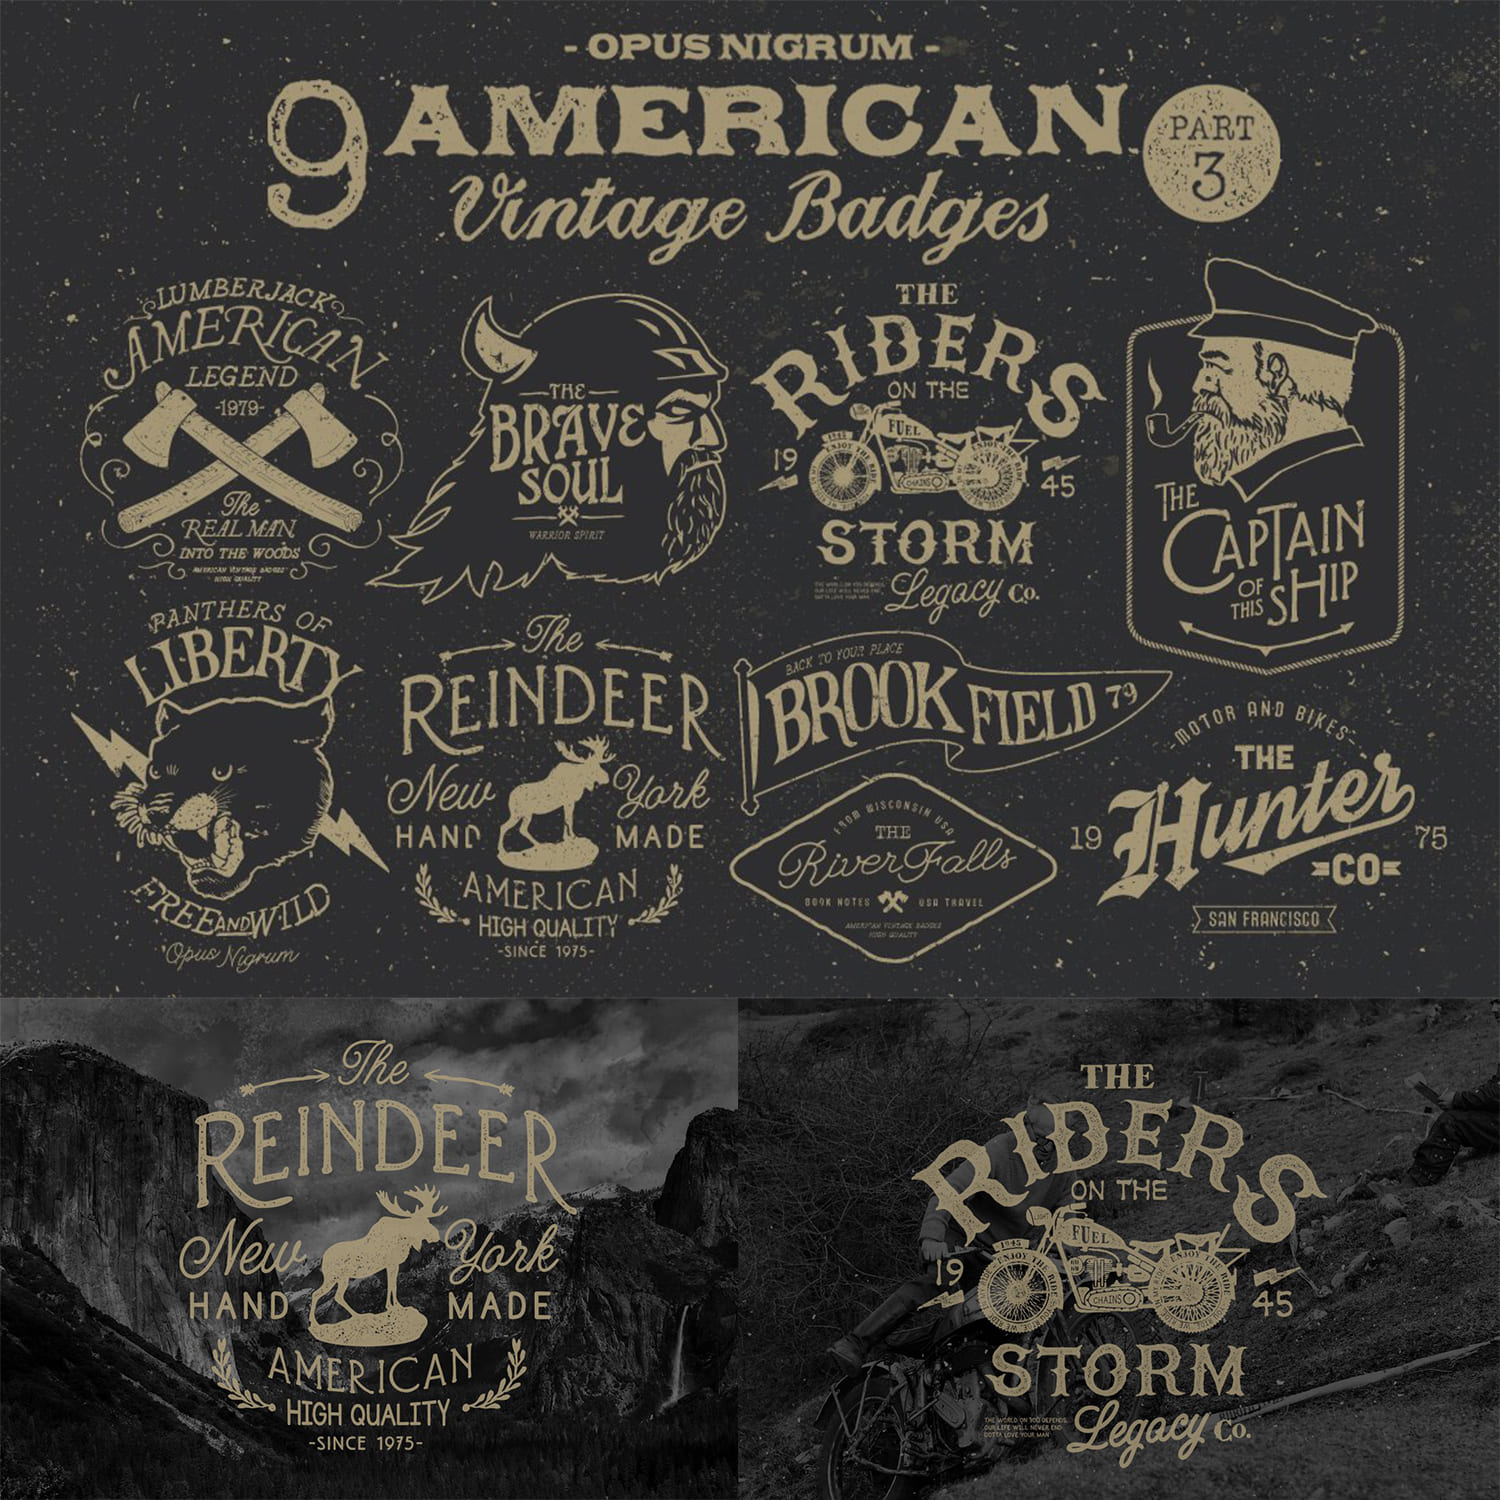 American Vintage Badges Part.3 cover image.